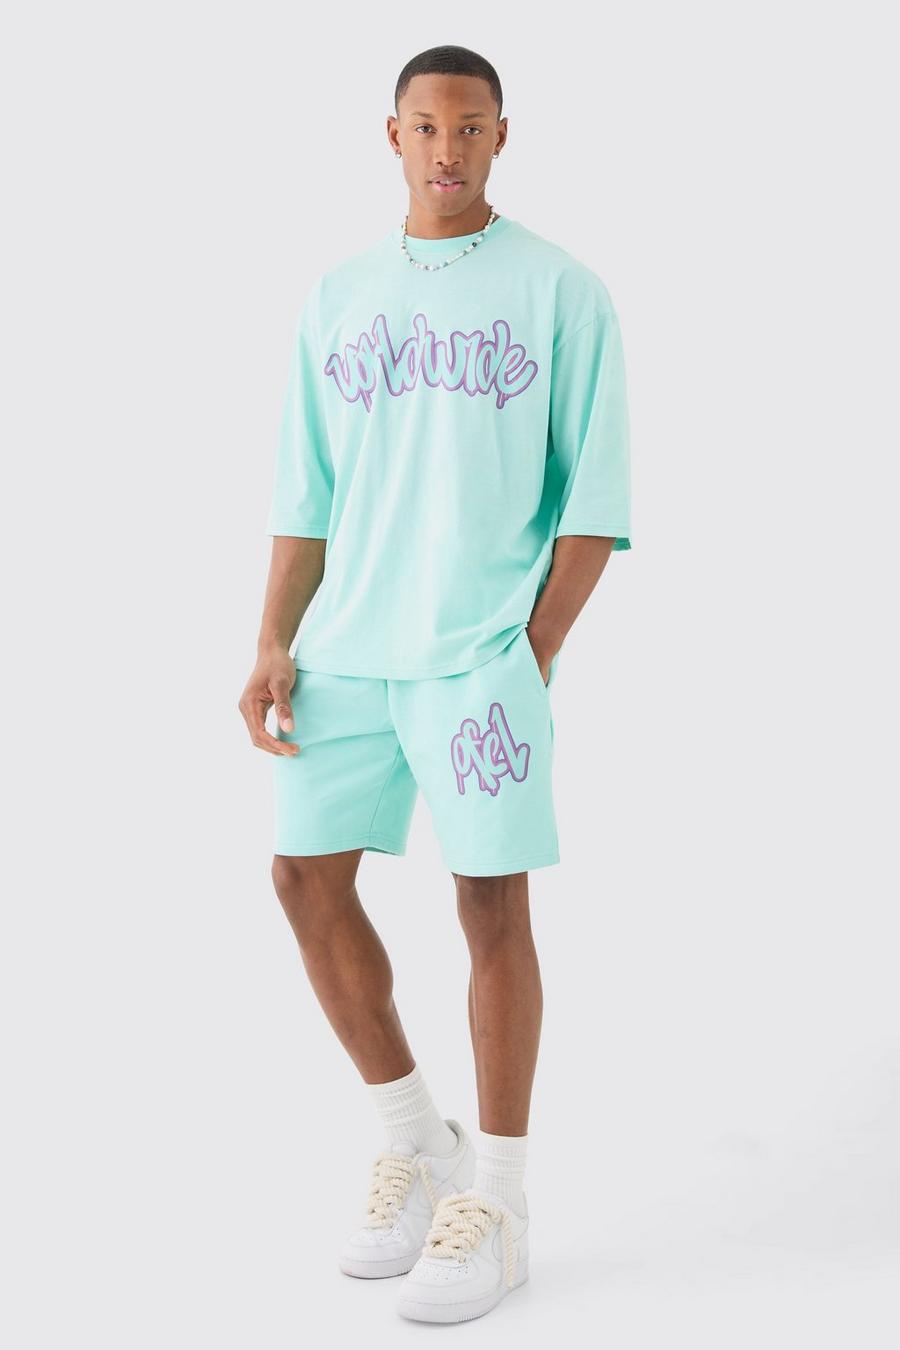 Aqua Oversized Worldwide Half Sleeve T-shirt And Short Set